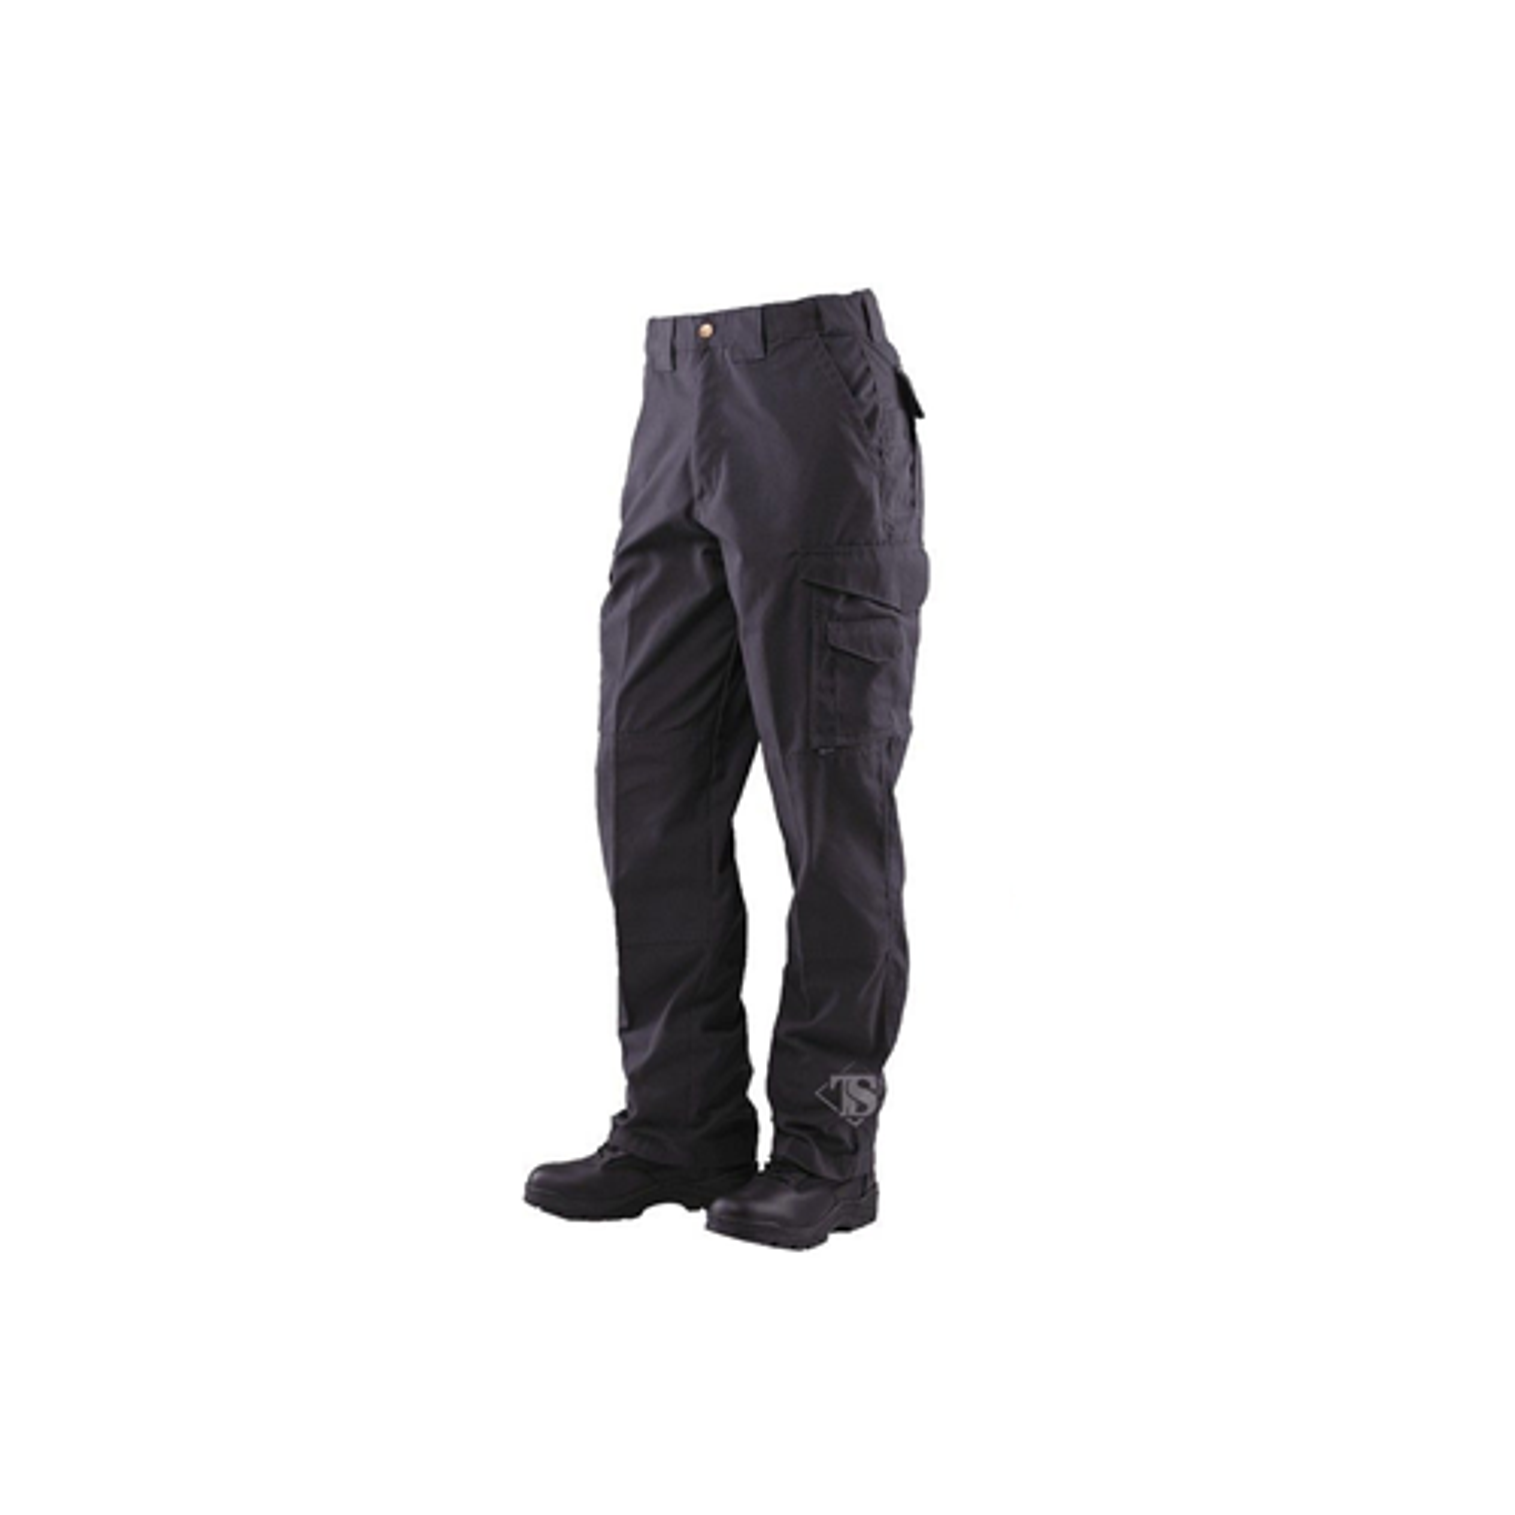 24-7 Original Tactical Pants - 6.5oz - Black - KRTSP-1062092